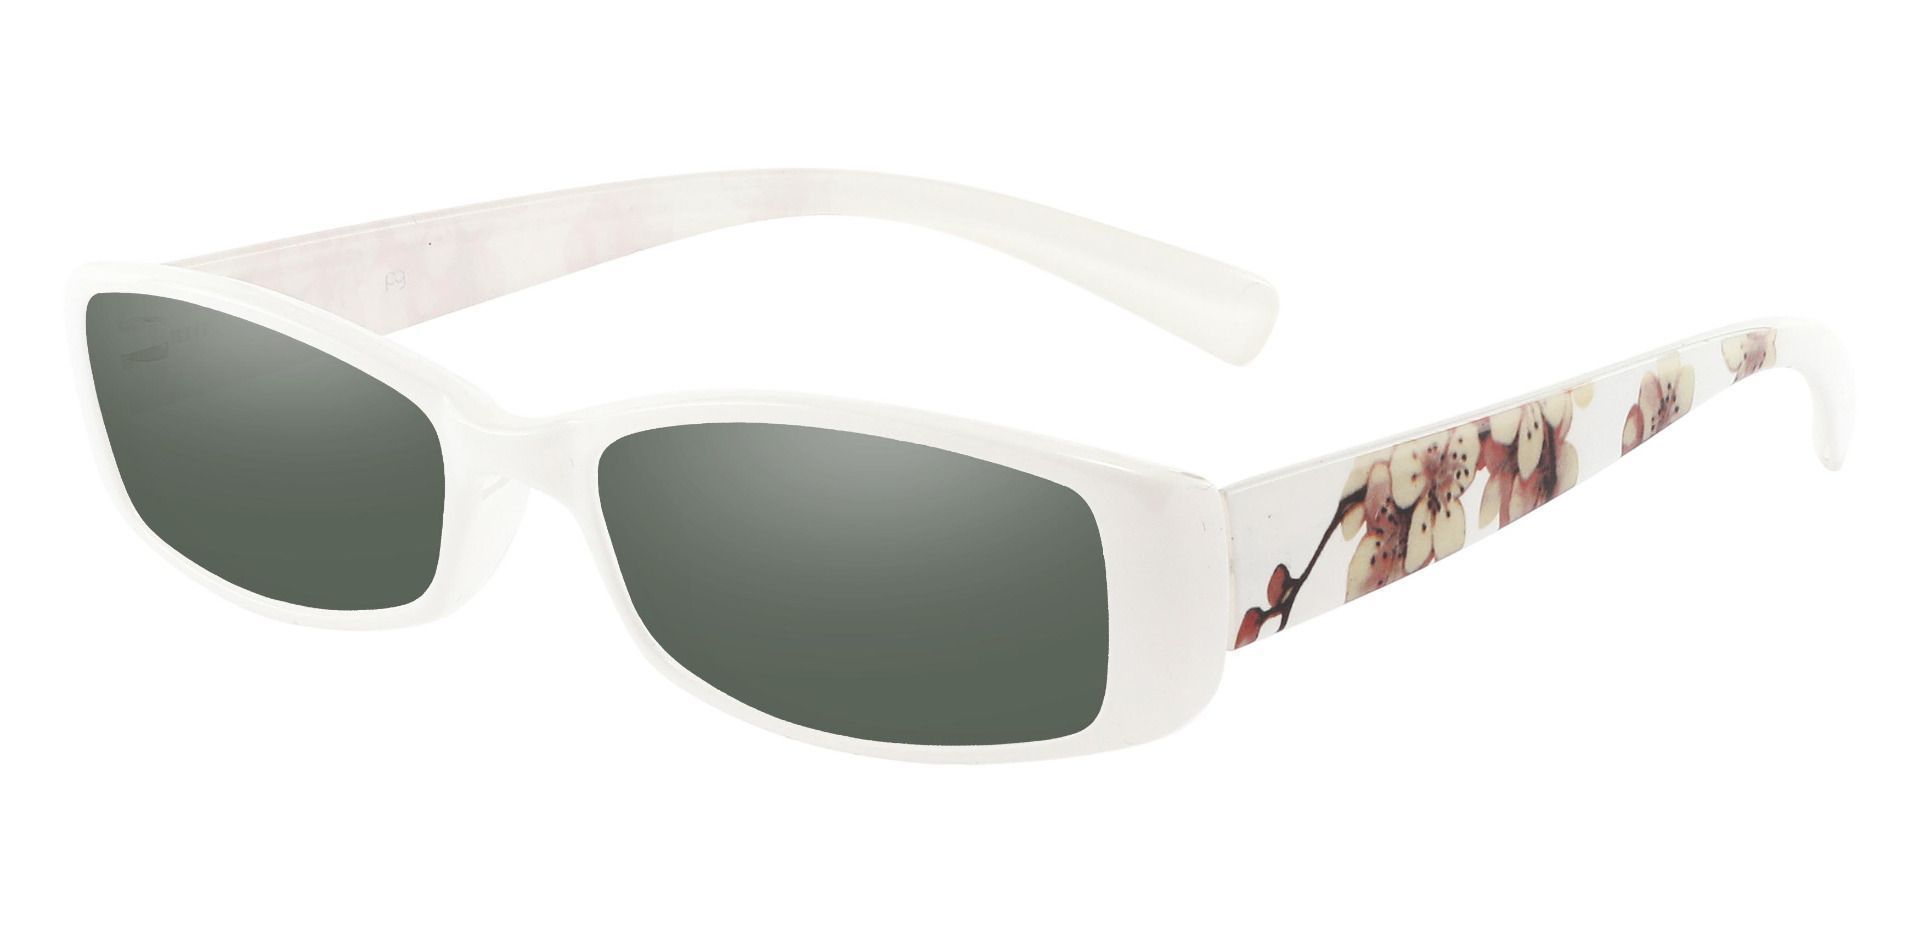 Medora Rectangle Non-Rx Sunglasses - White Frame With Green Lenses